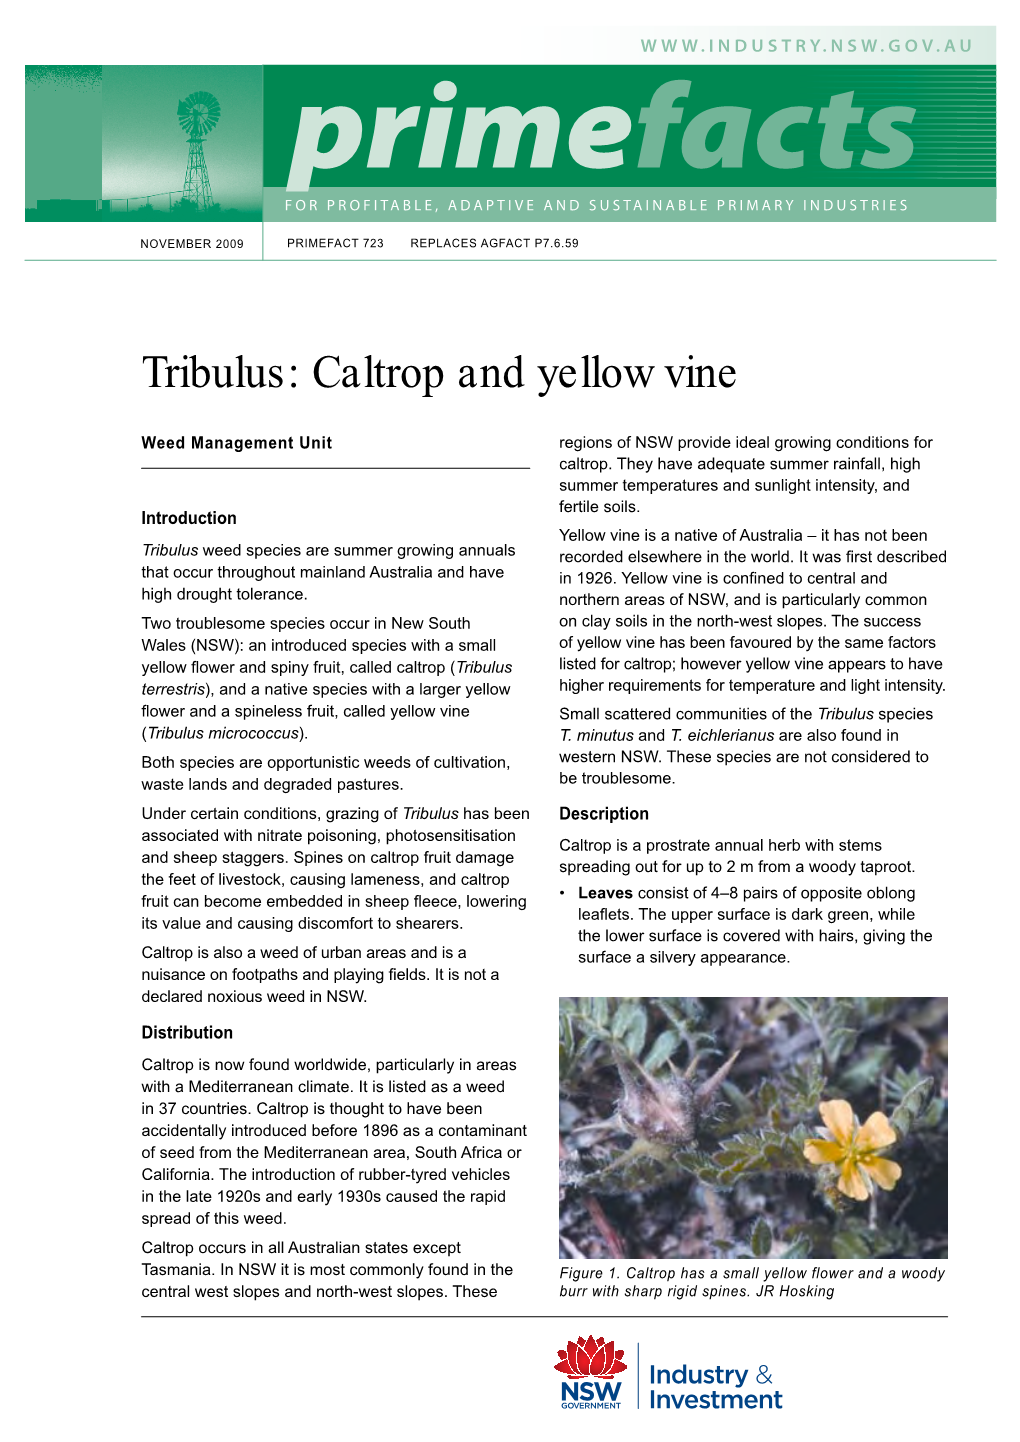 Tribulus: Caltrop and Yellow Vine